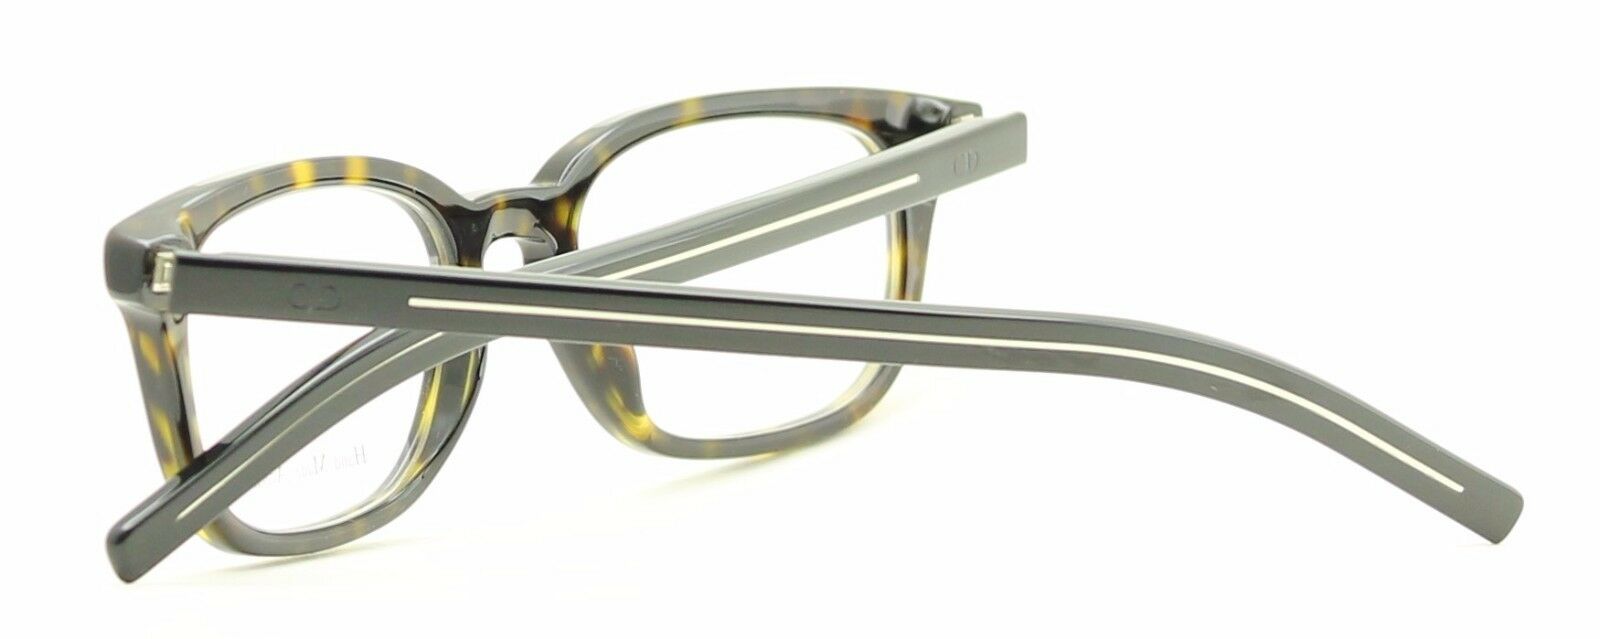 DIOR HOMME 191 TRD Eyewear Glasses RX Optical Eyeglasses FRAMES BNIB New - ITALY